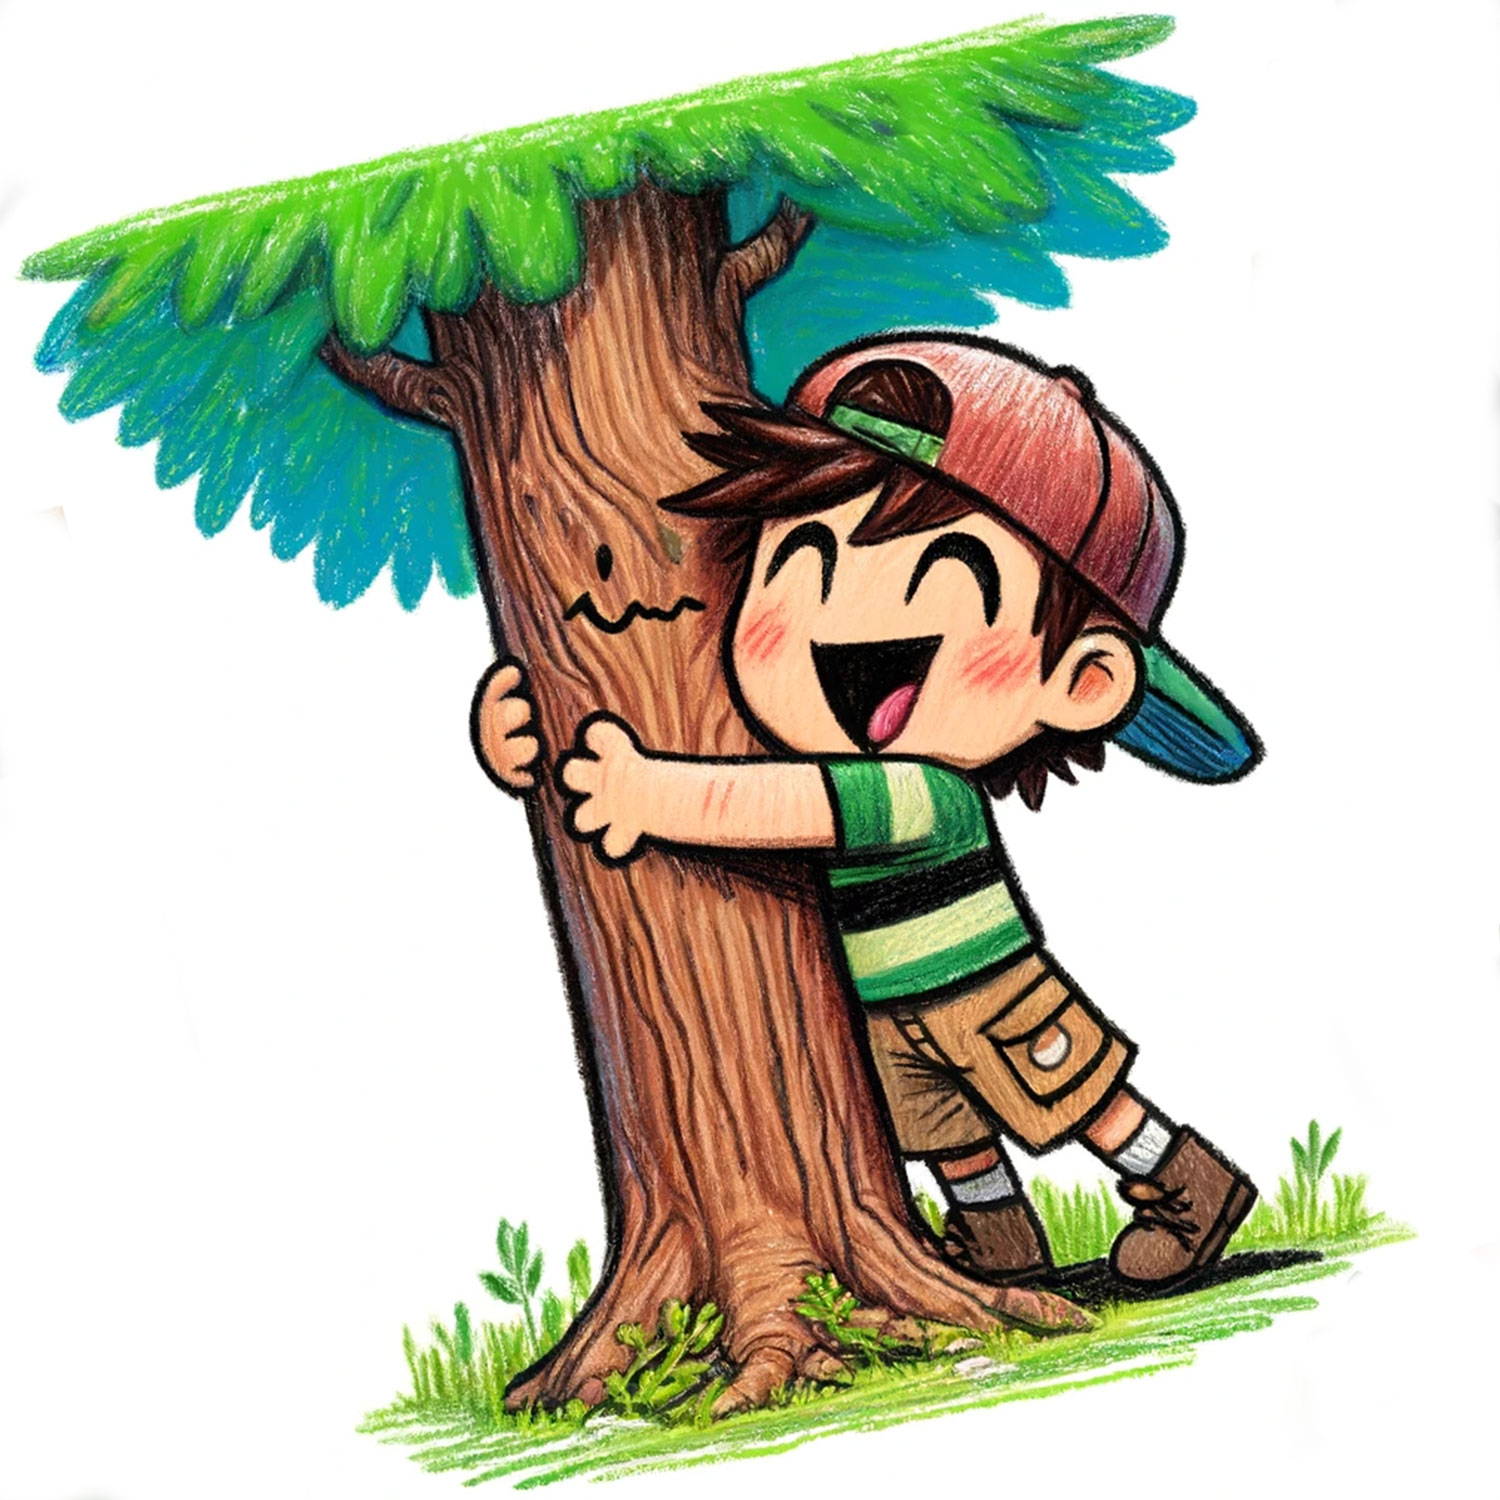 Sammy giving a tree a big hug